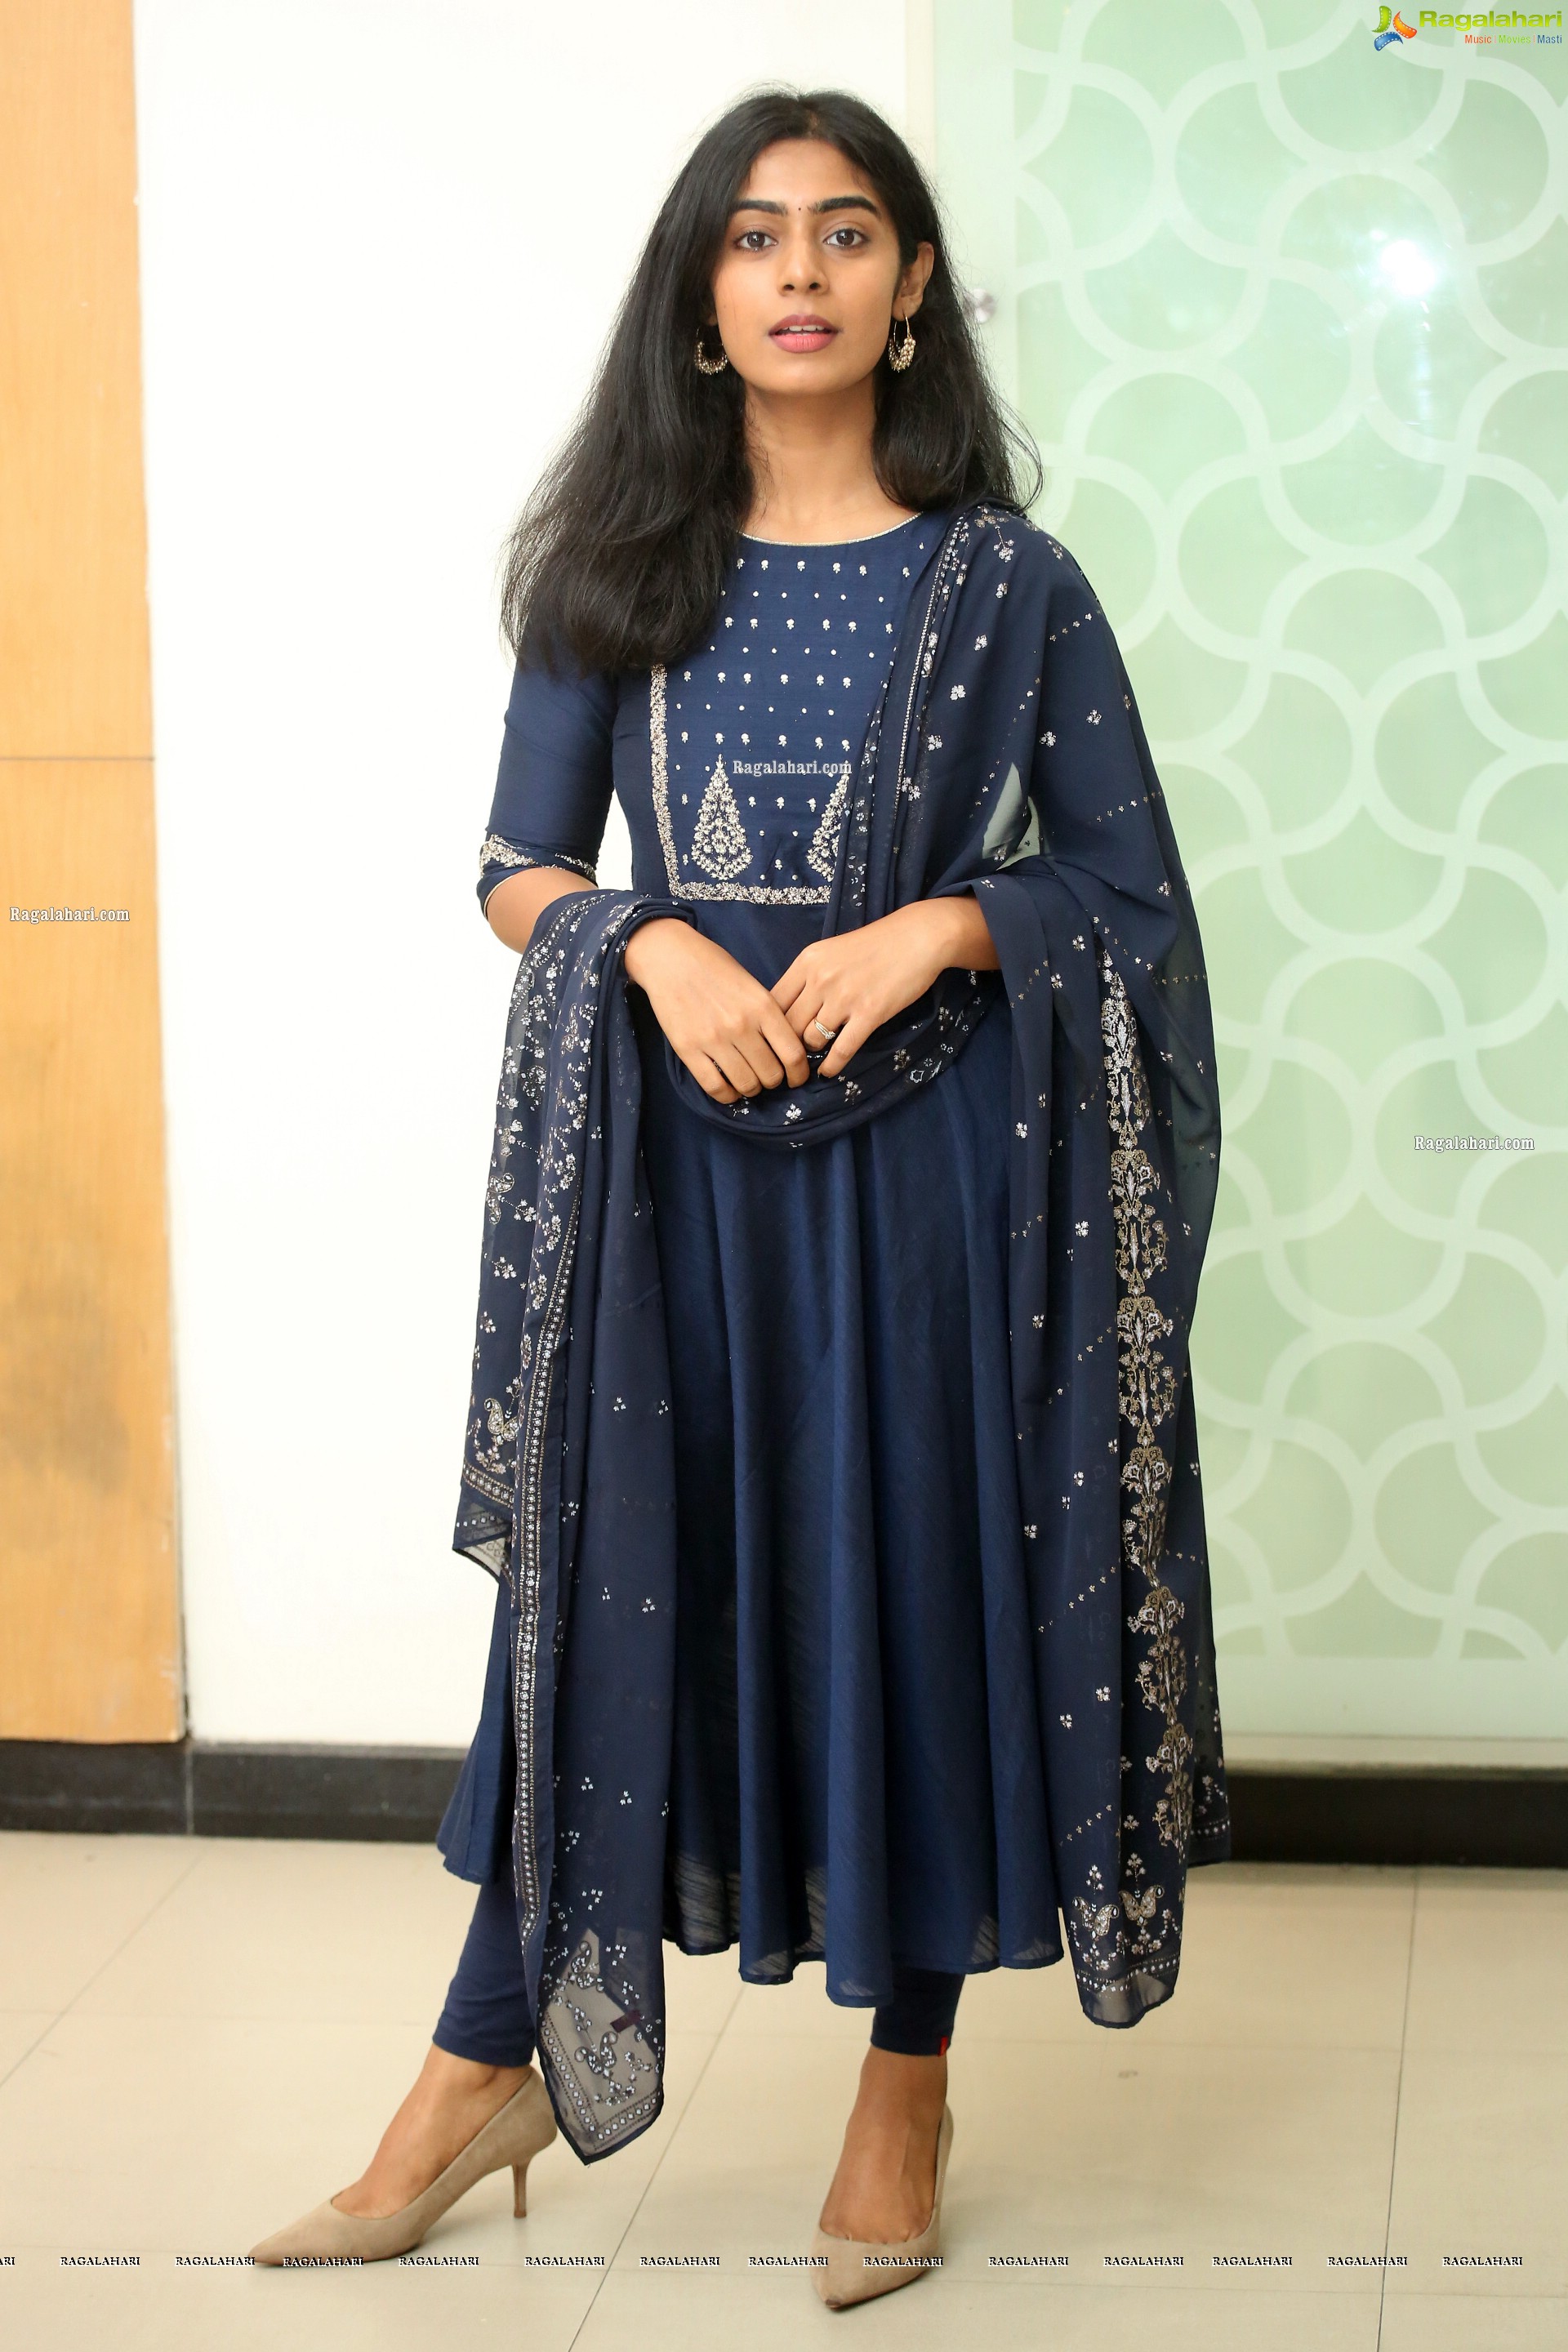 Meghalekha at Paagal Movie Success Event, HD Photo Gallery